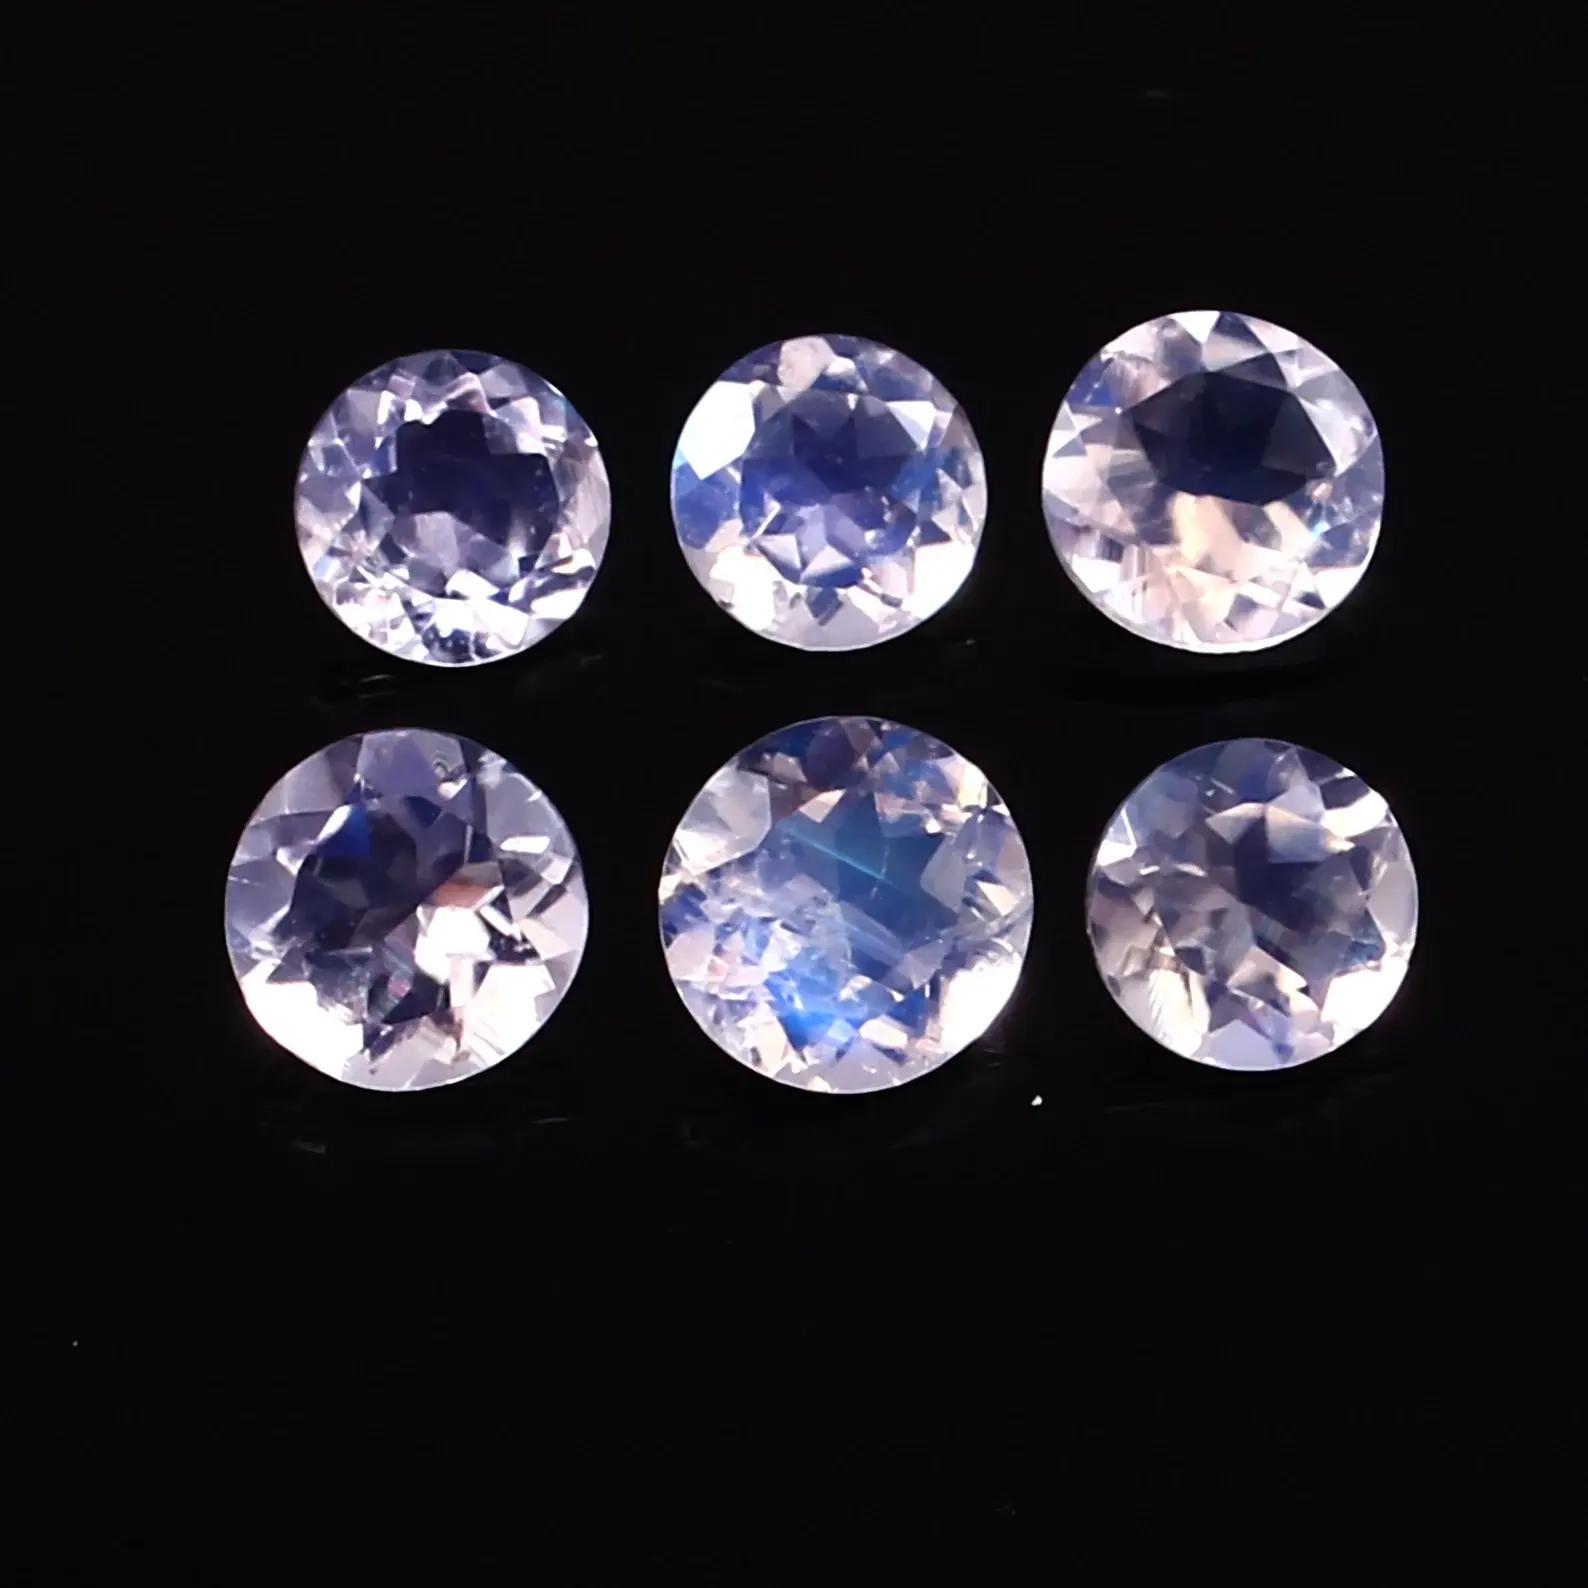 Rainbow Round Gemstone Good Quality 2.10 Carat 4.5/5mm Size Loose Gemstone Blue Fire Natural Moonstone 6Piece Lot